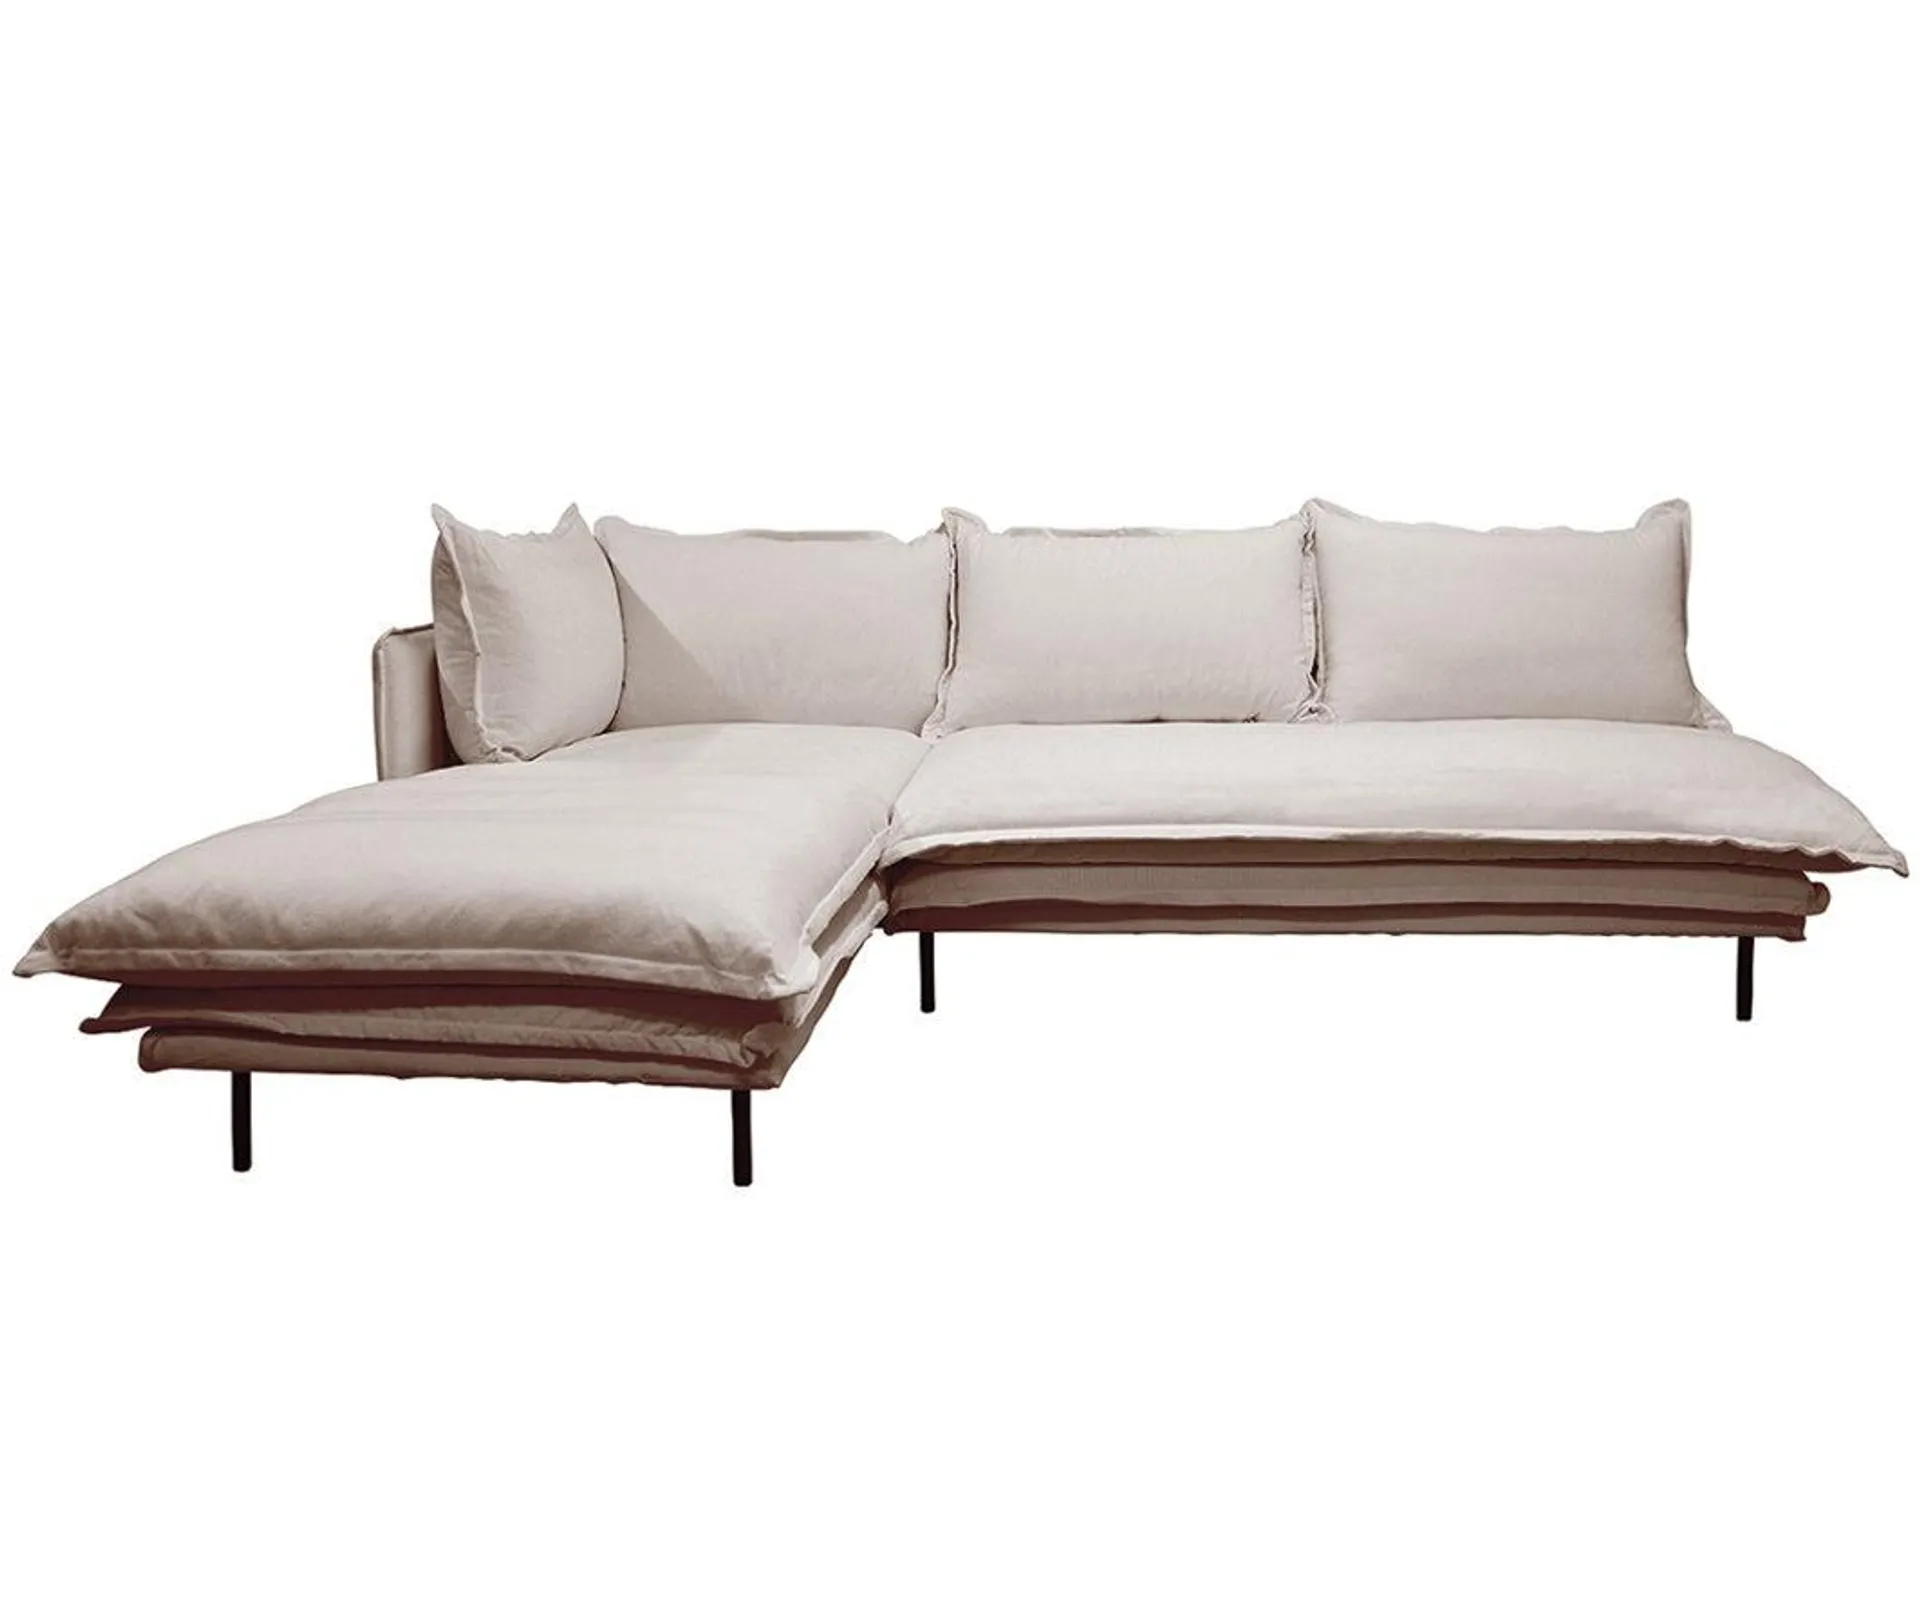 Asha modular linen sofa natural left 260cm